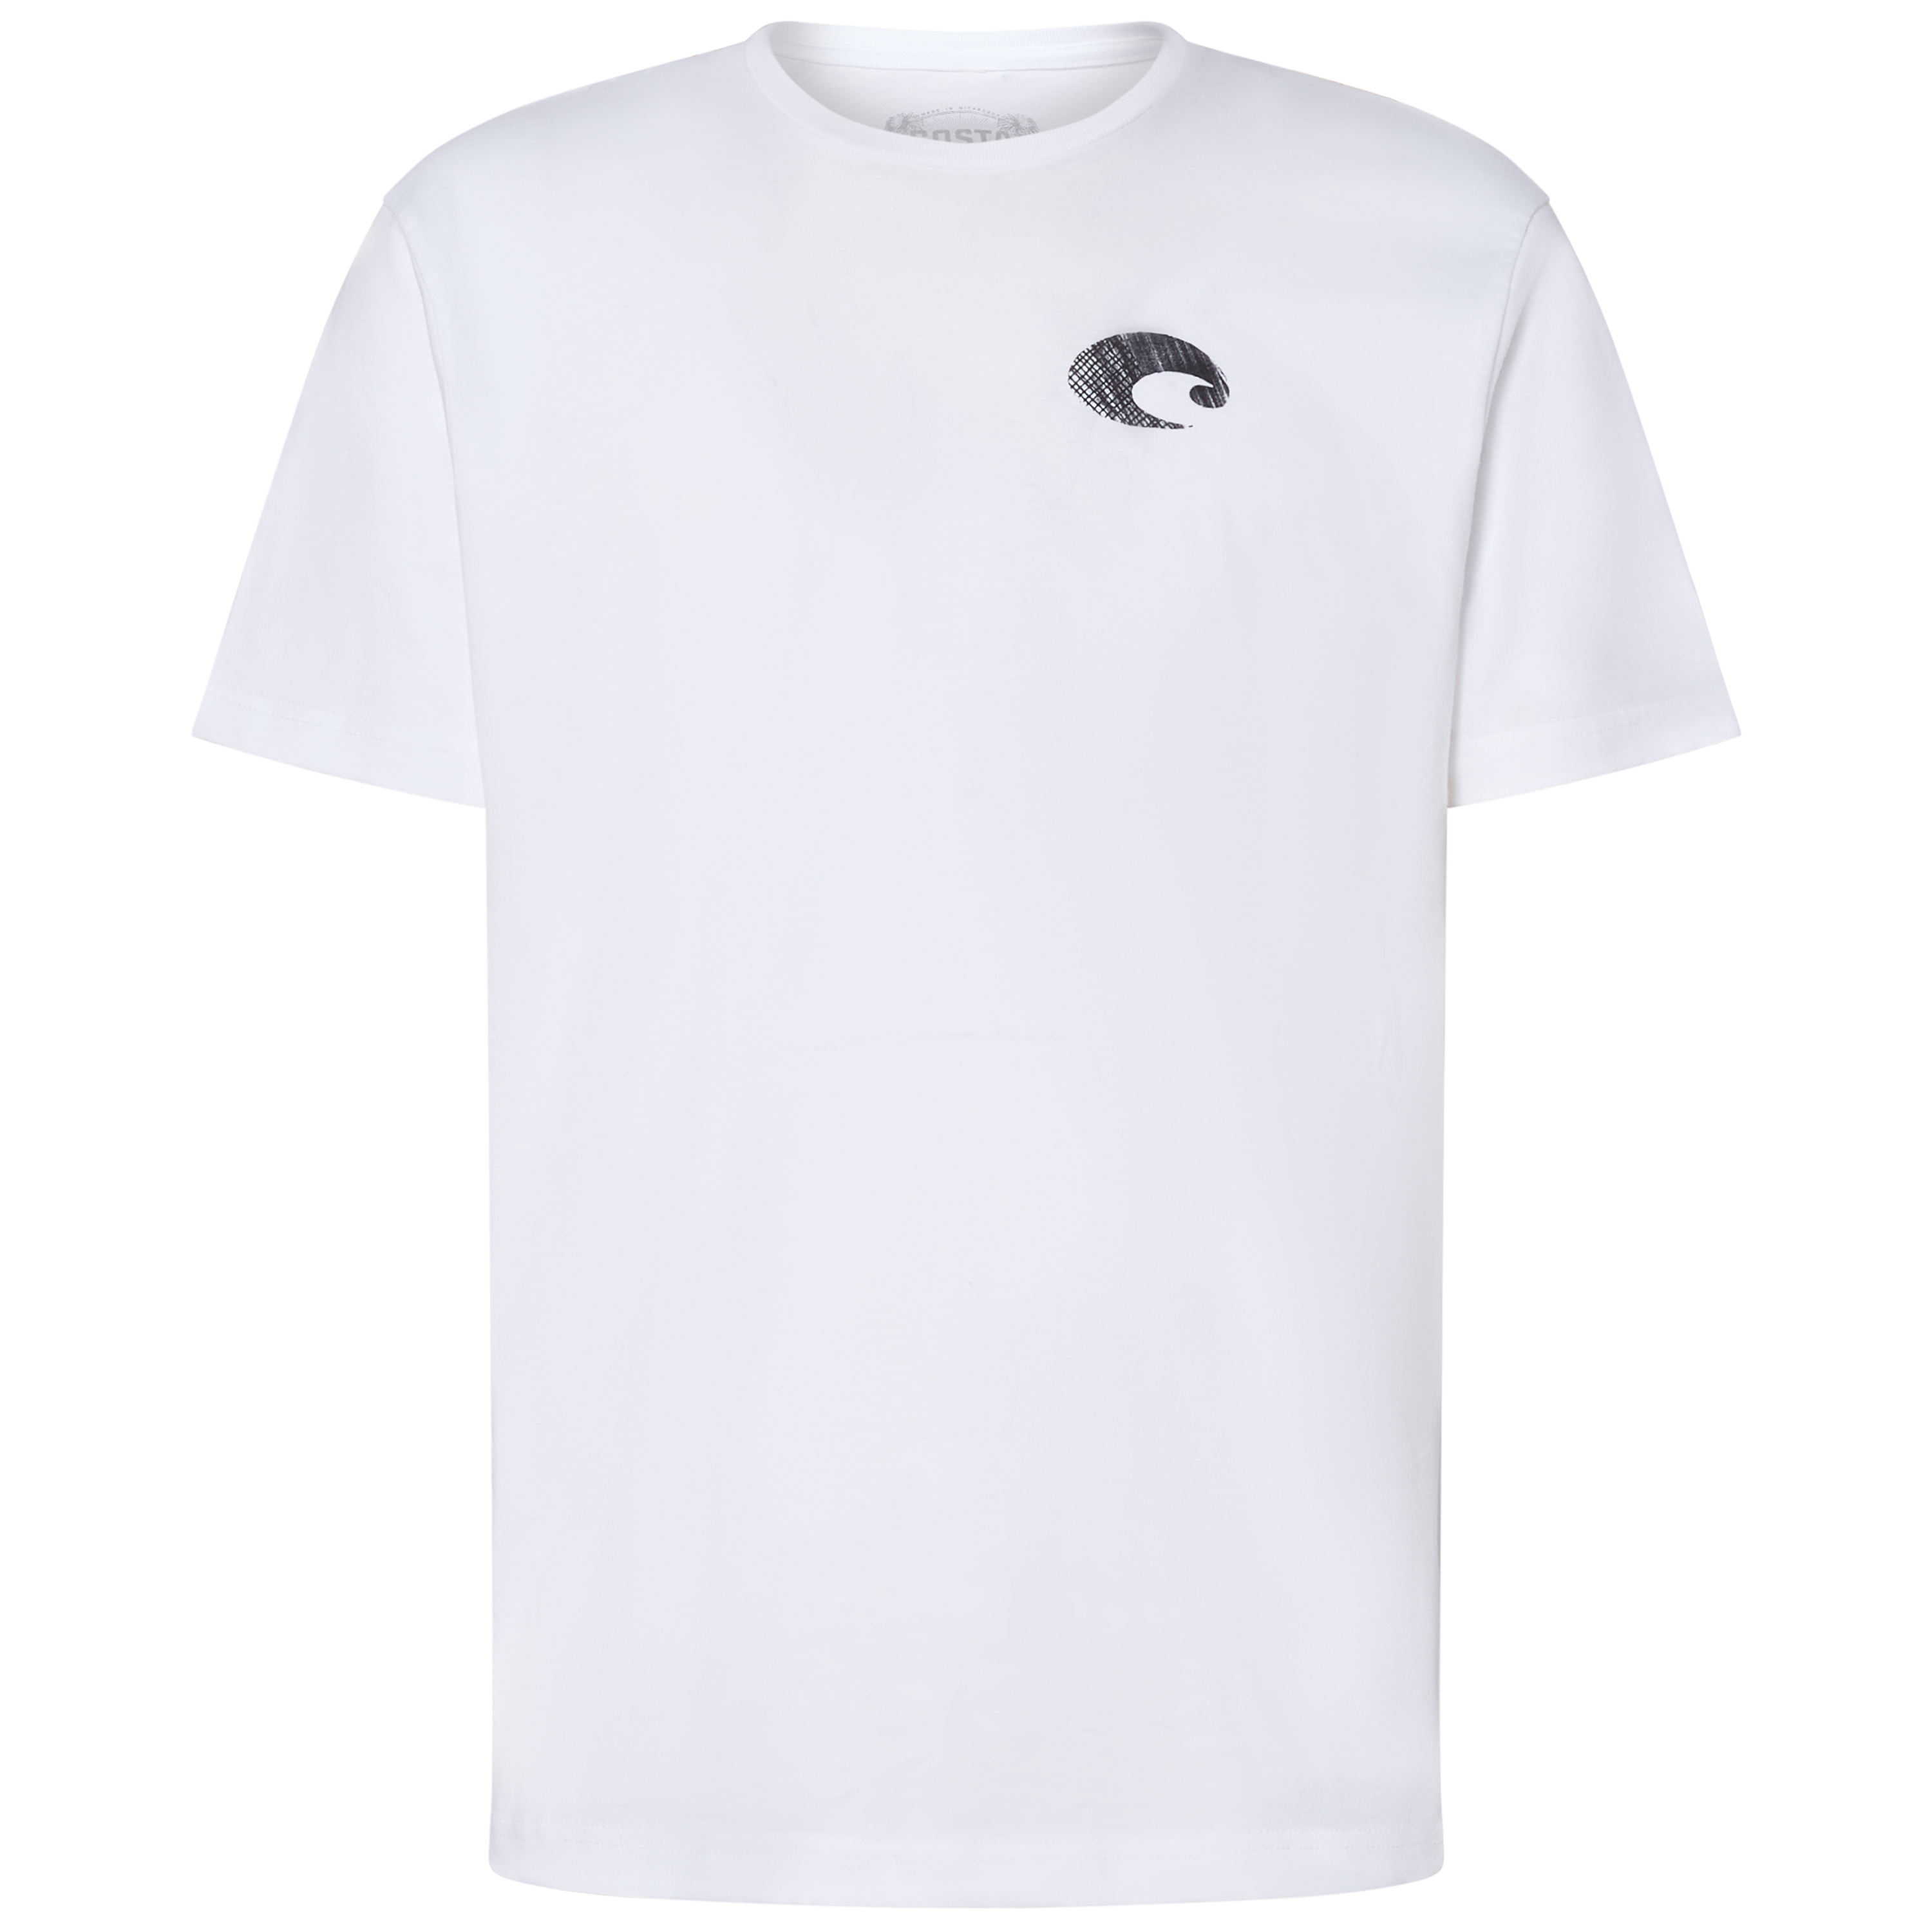 Costa Mossy Oak Coastal T-Shirt - White - M